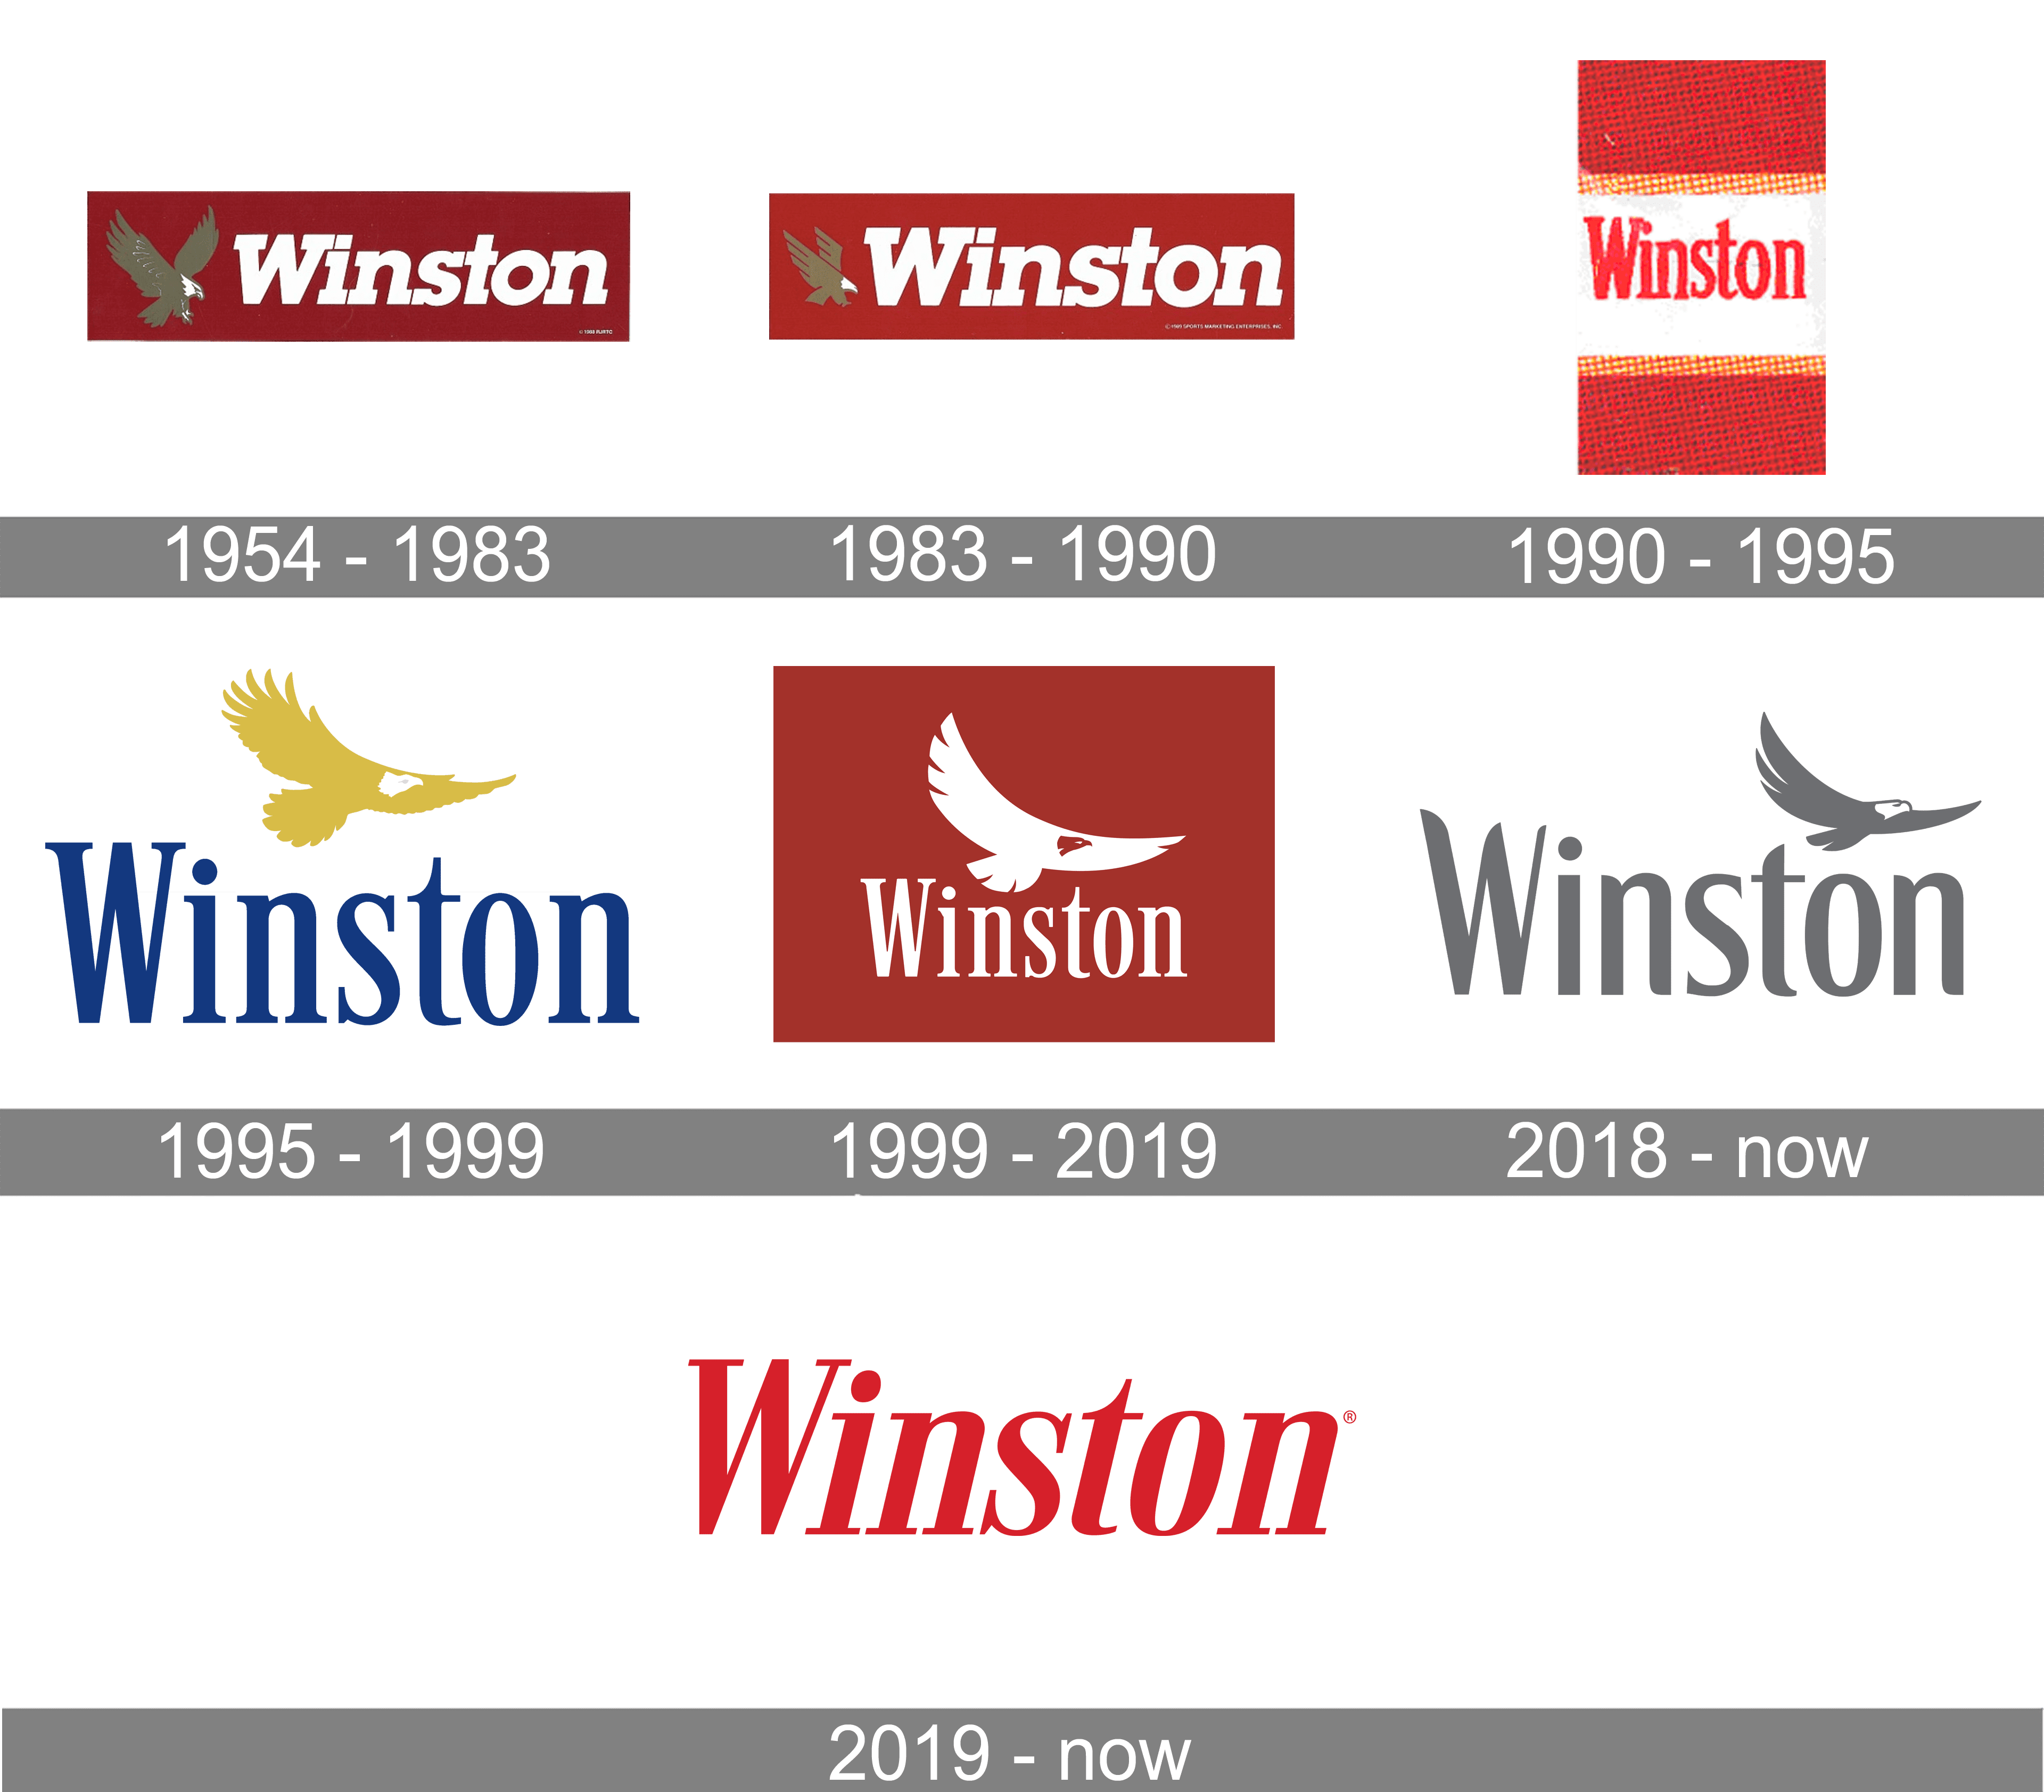 cigarette logos